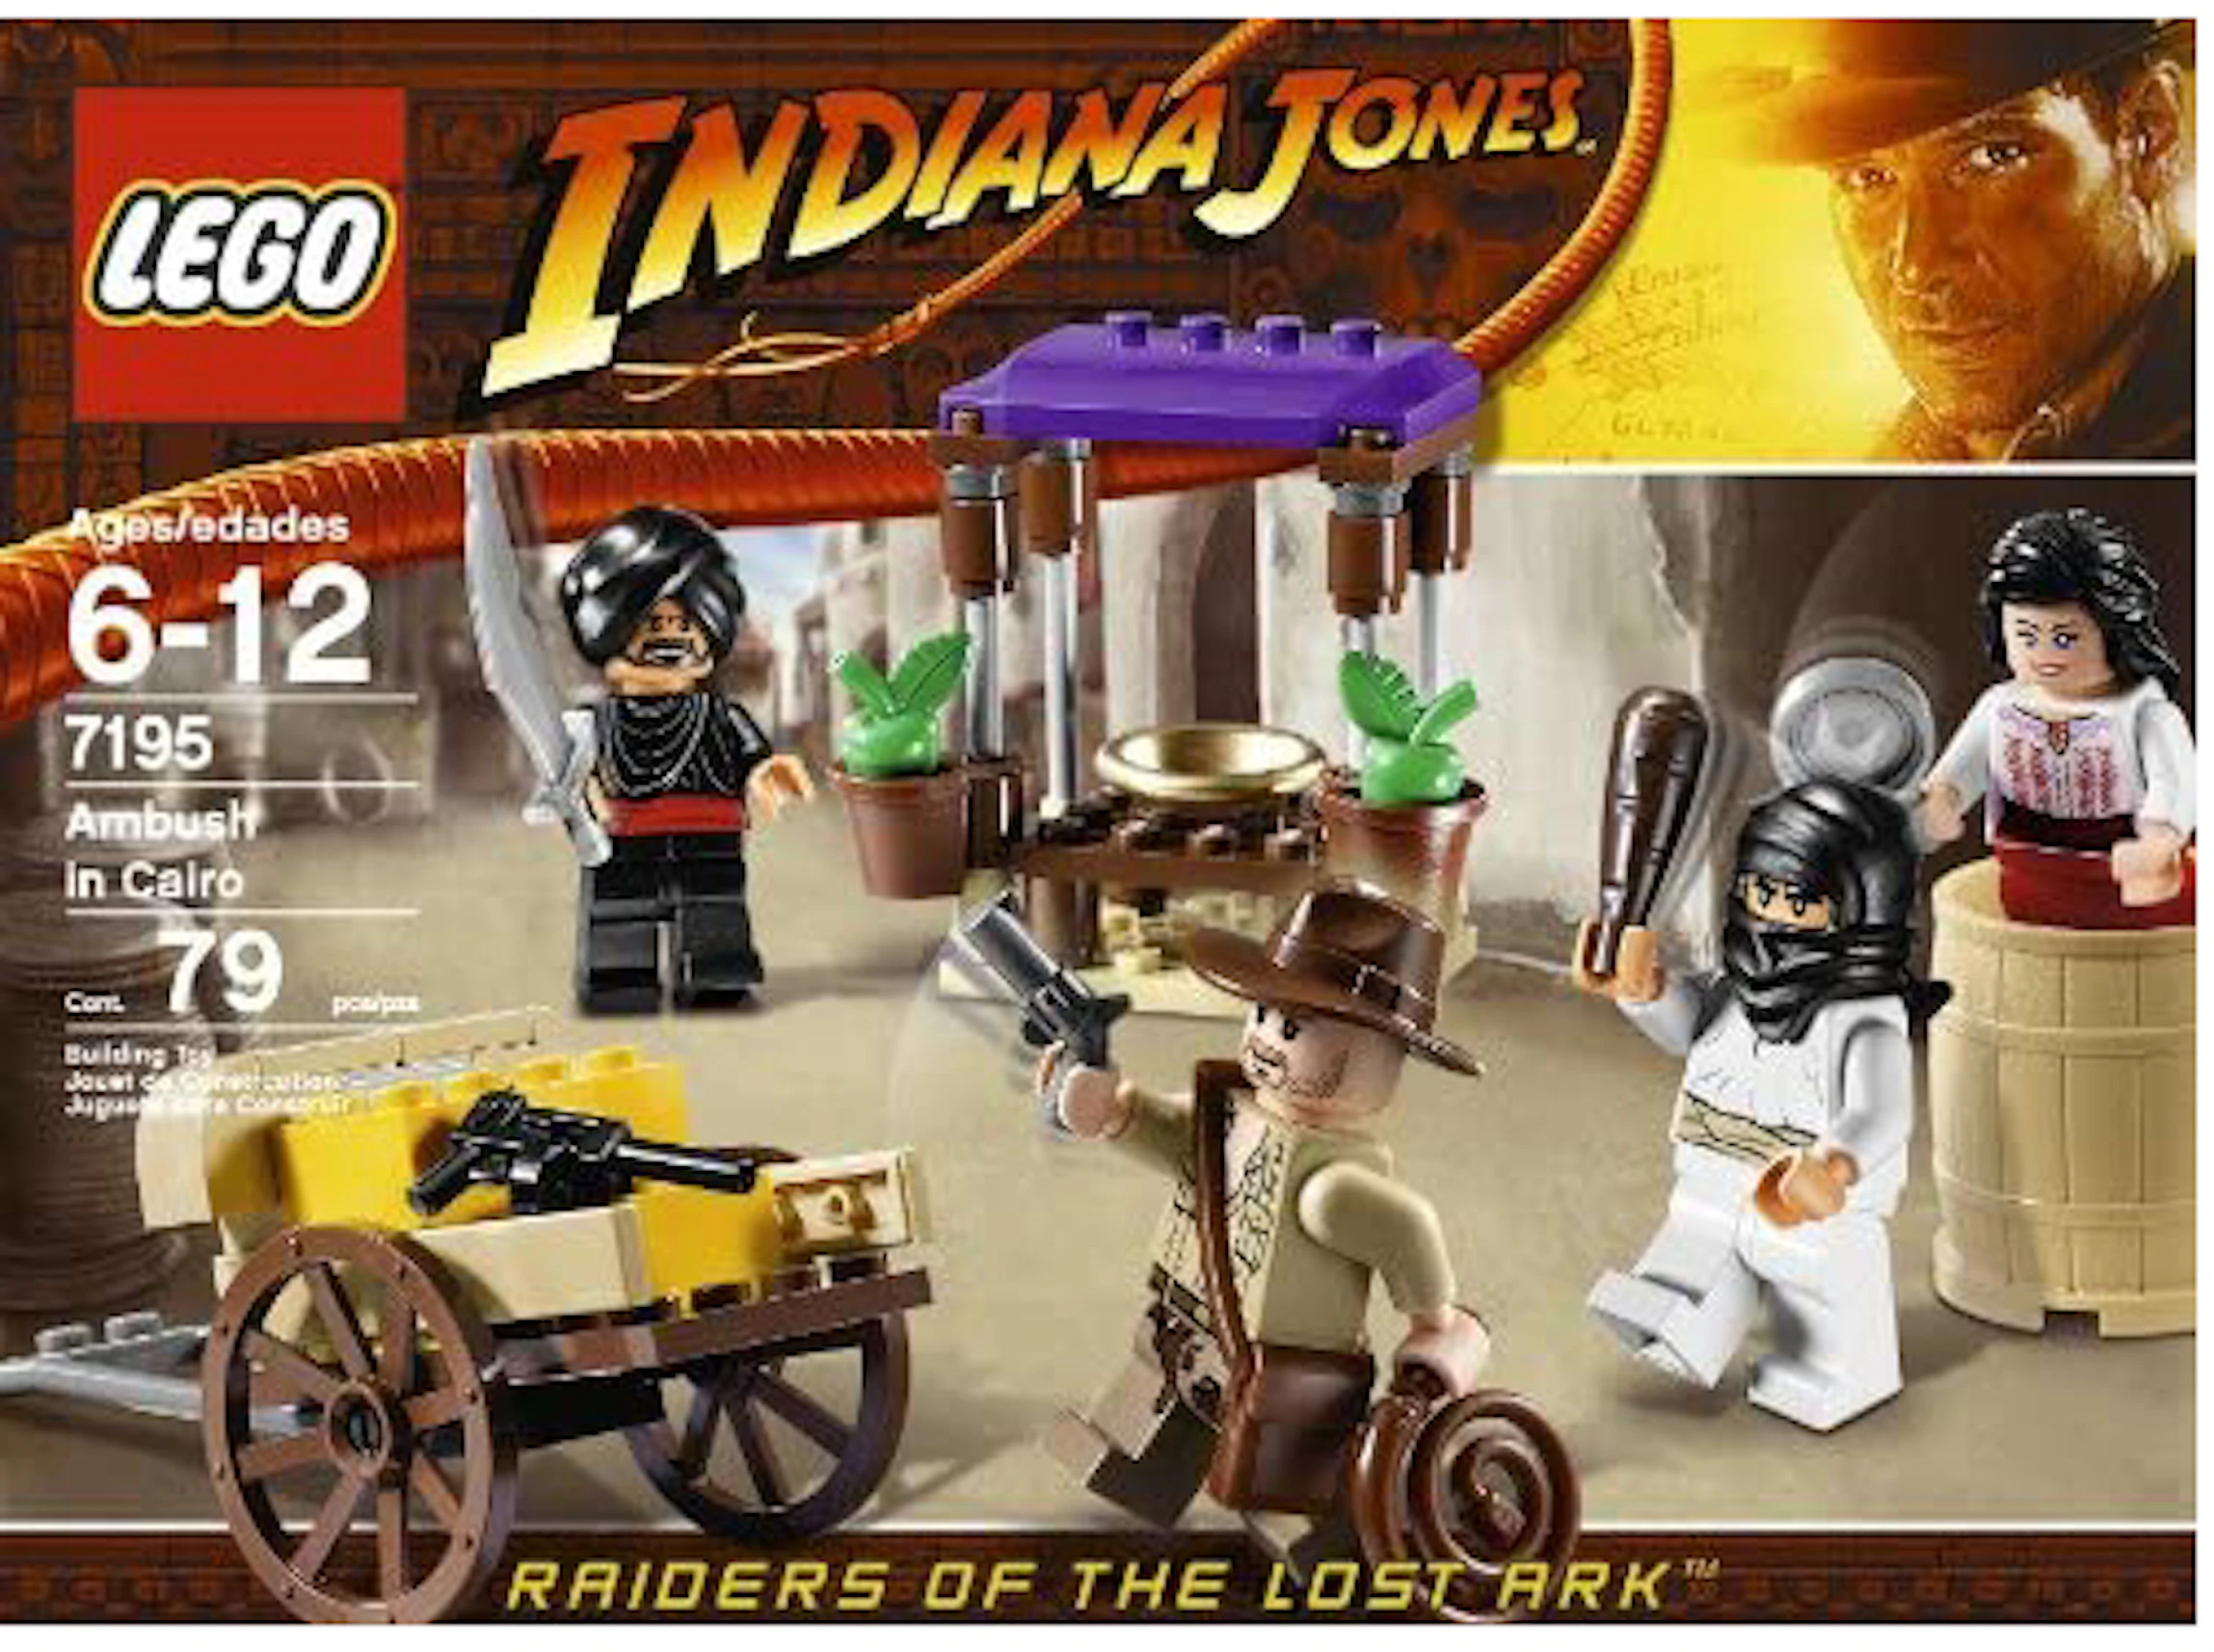 Lego Indiana Jones Ambush In Cairo Set 7195 Gb